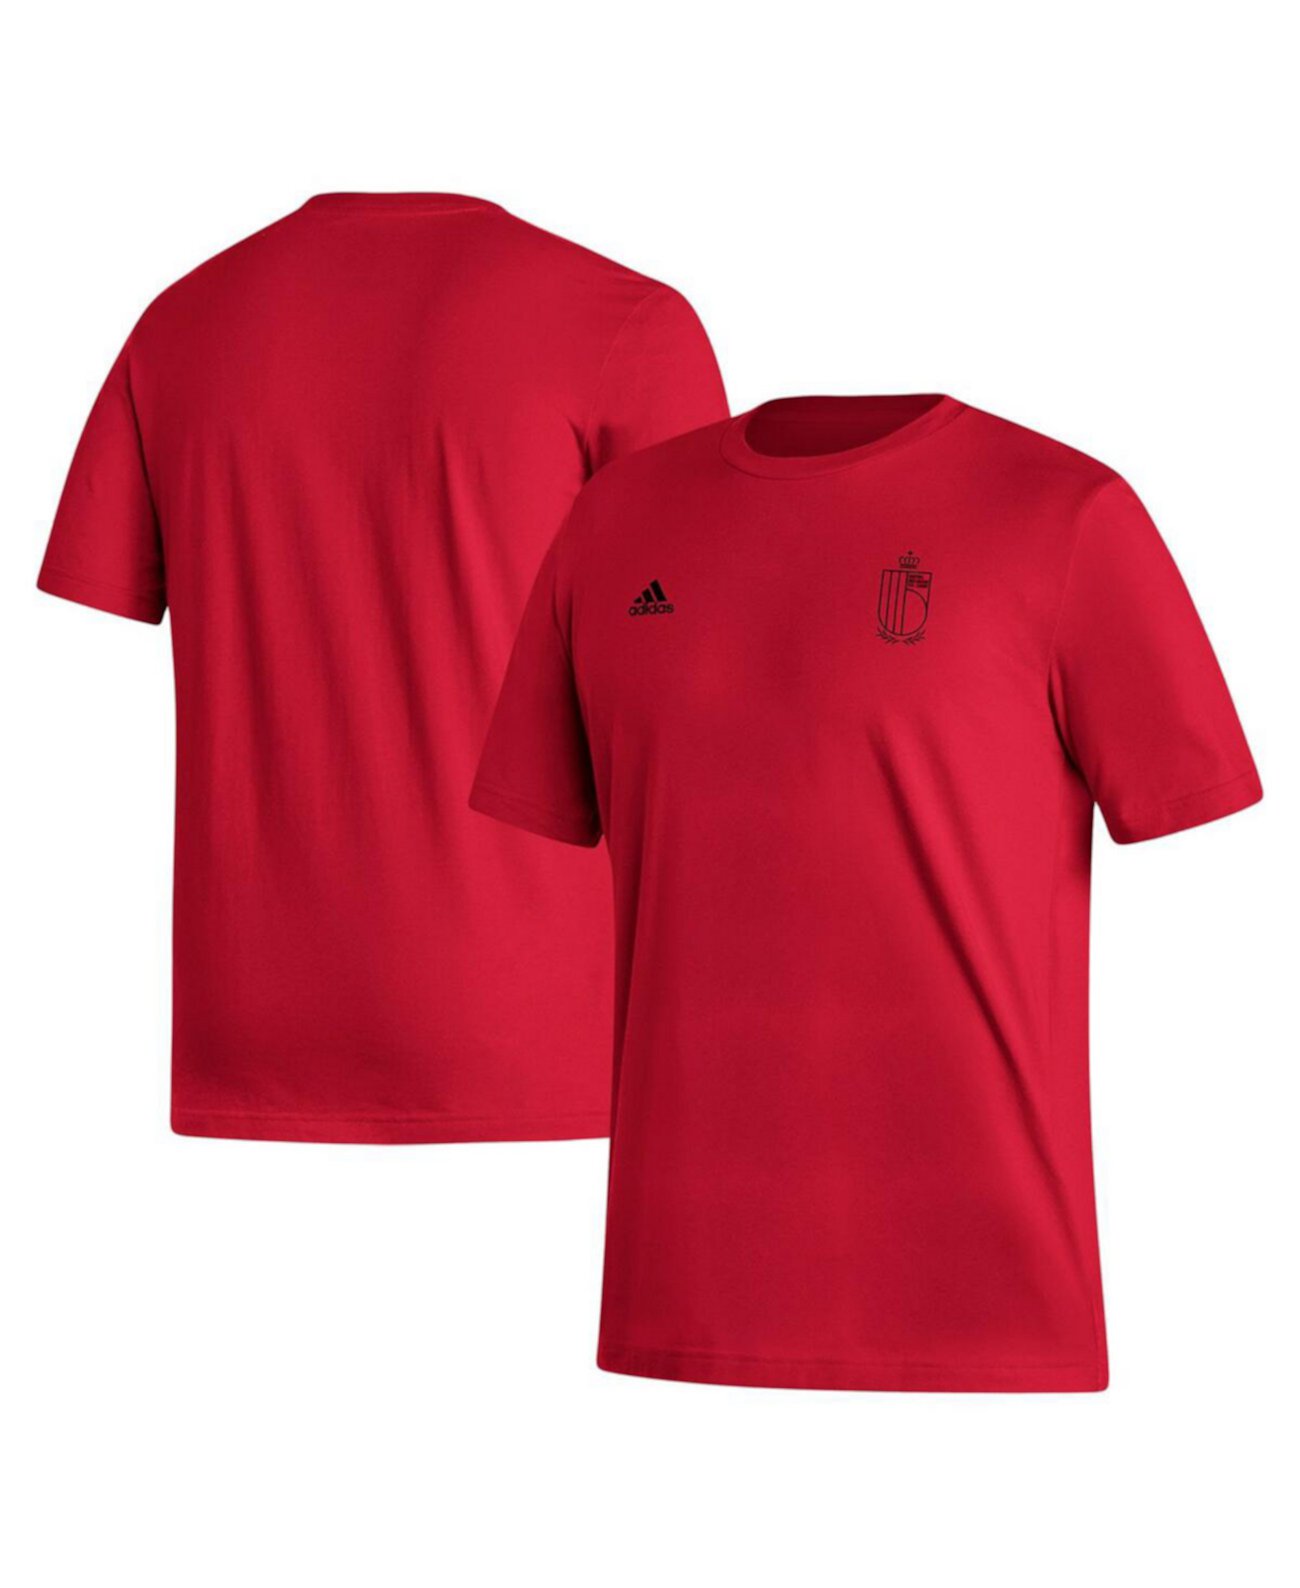 Men's Red Belgium National Team Crest T-Shirt Adidas